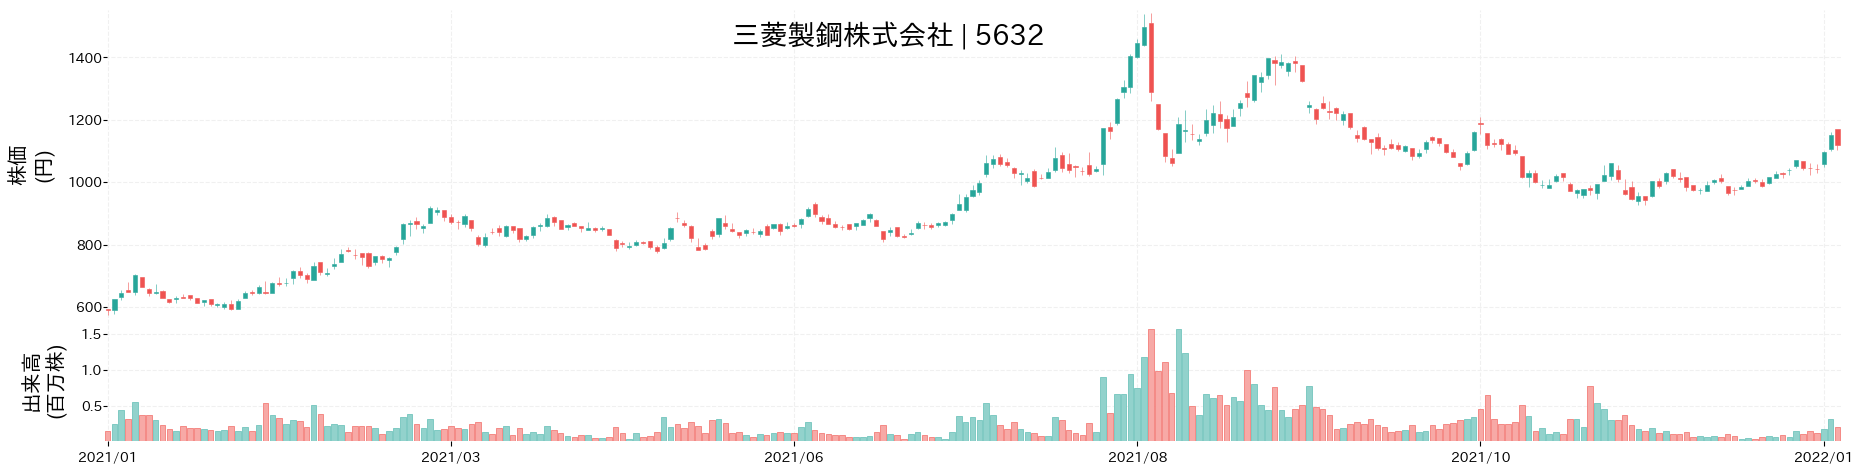 三菱製鋼の株価推移(2021)